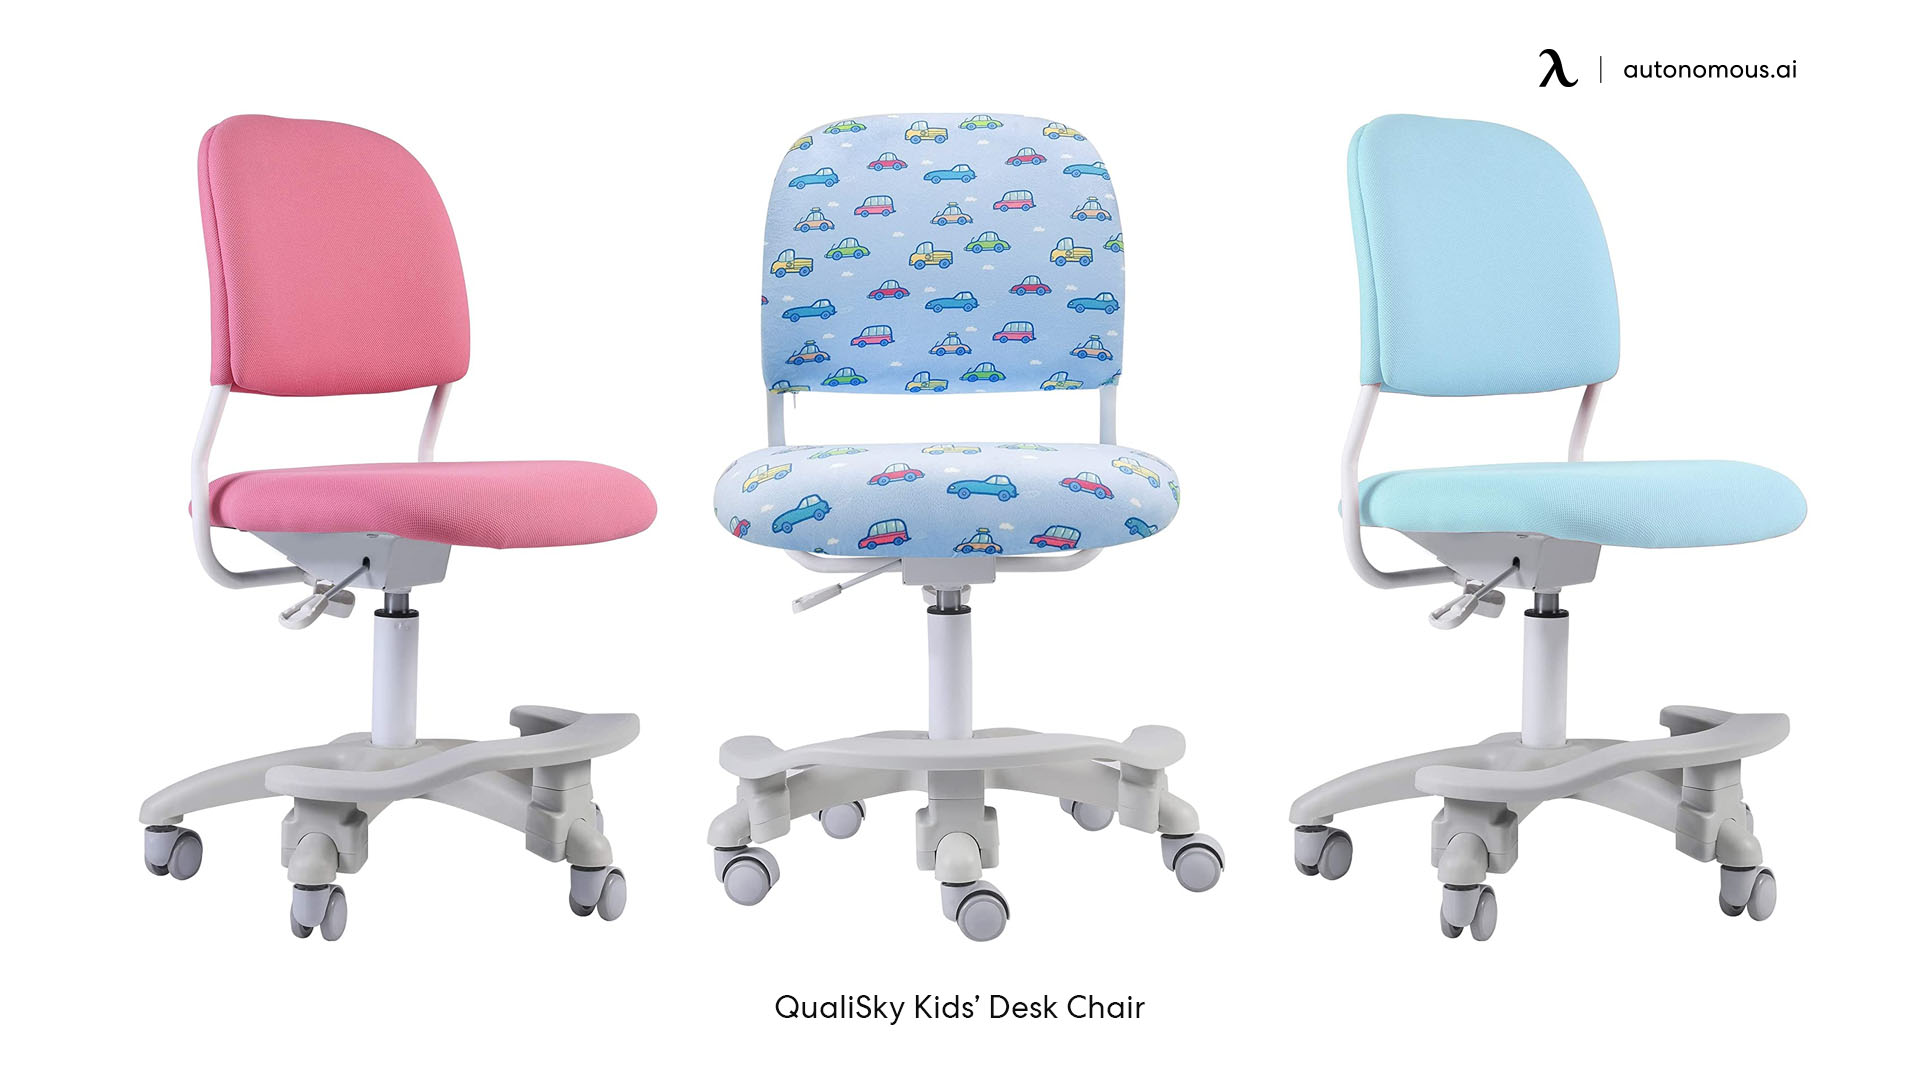 QualiSky Kids’ Desk Chair